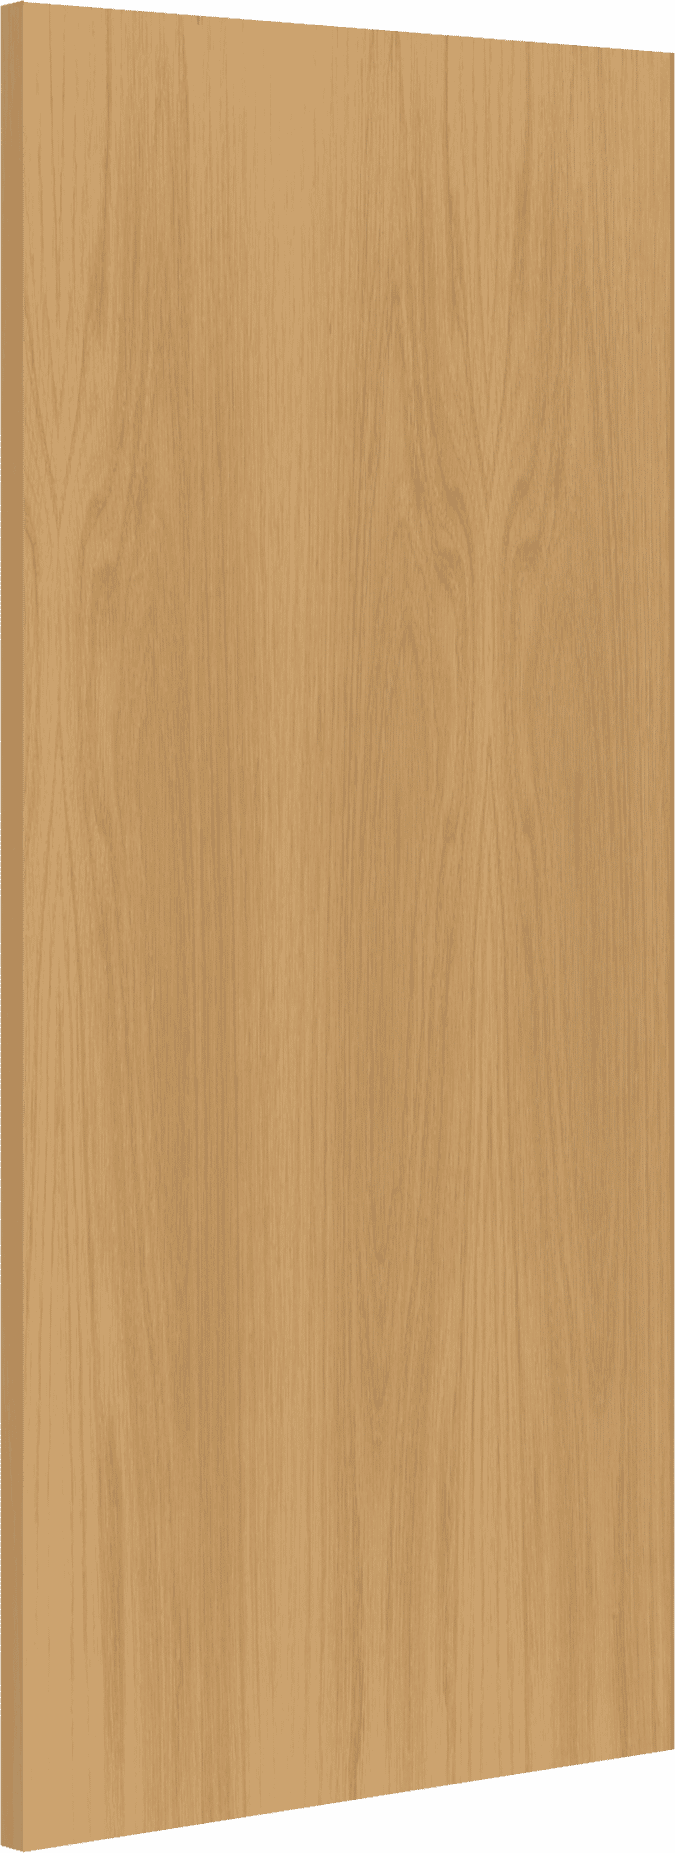 1981 x 914 x 54mm (36") Deanta Architectural Flush Oak - Prefinished   FD60 Fire Door